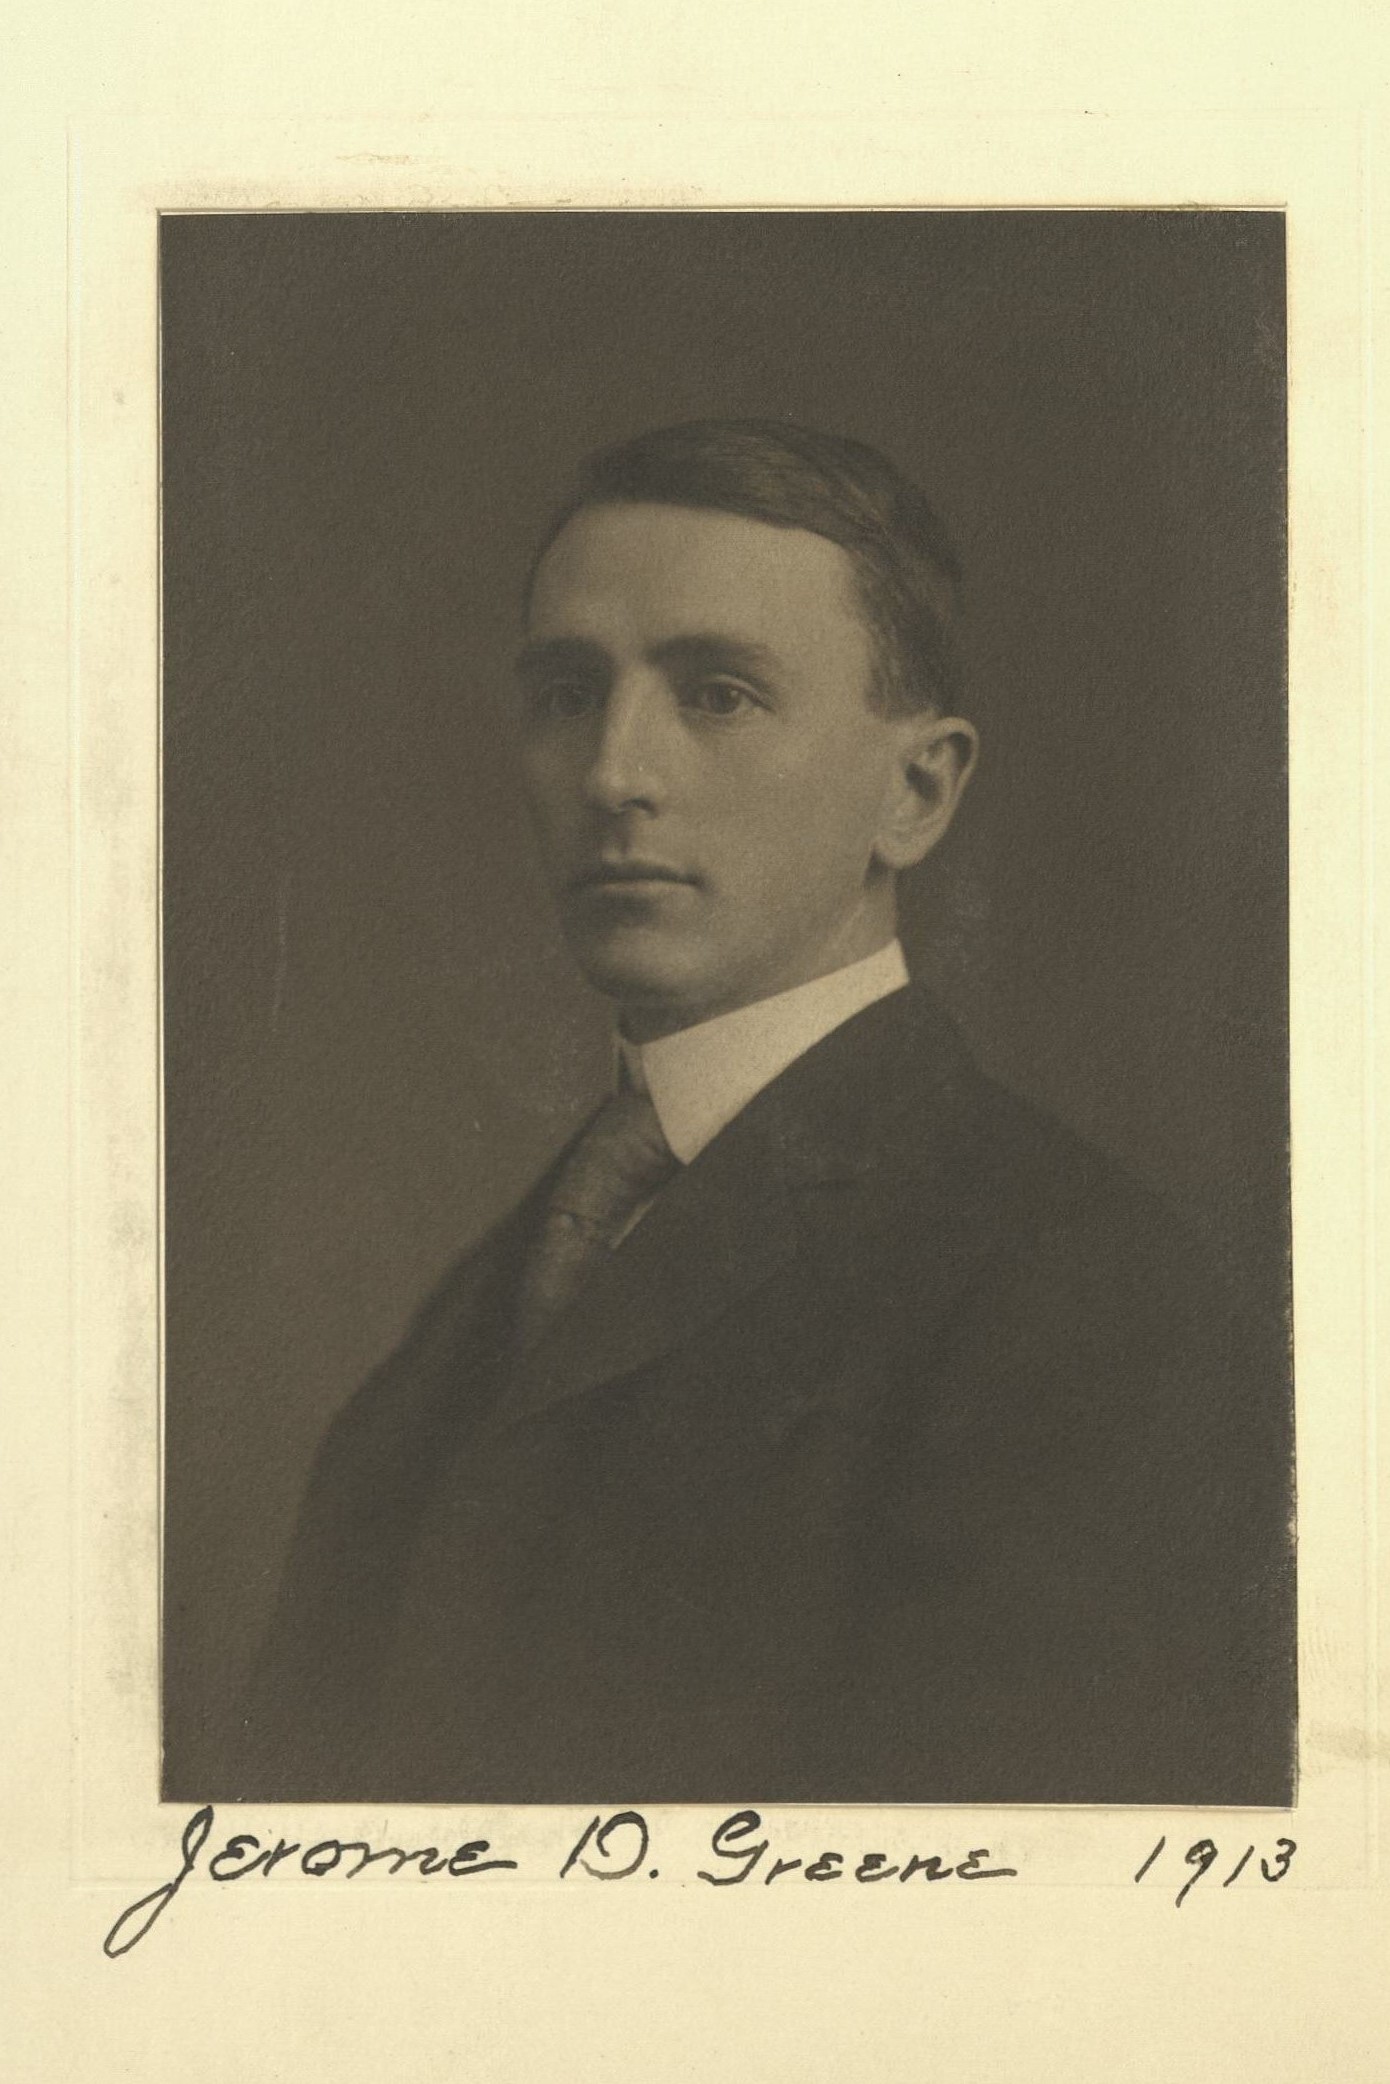 Member portrait of Jerome Davis Greene